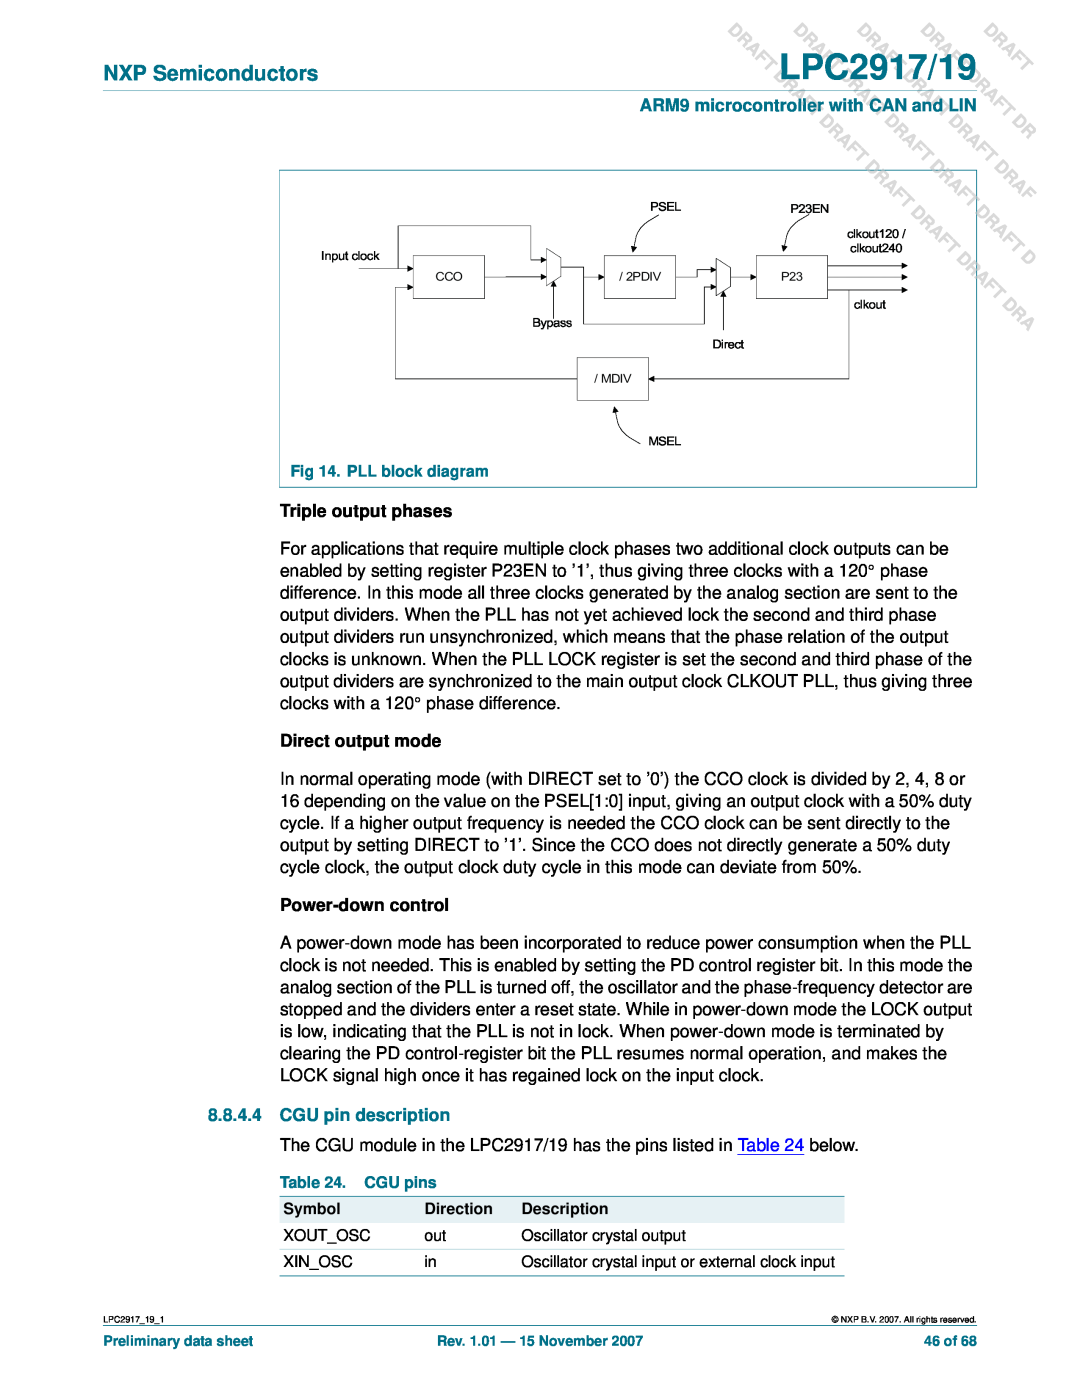 NXP Semiconductors LPC2919 CGU pin description, DLPC2917/19, Triple output phases, Direct output mode, Power-down control 